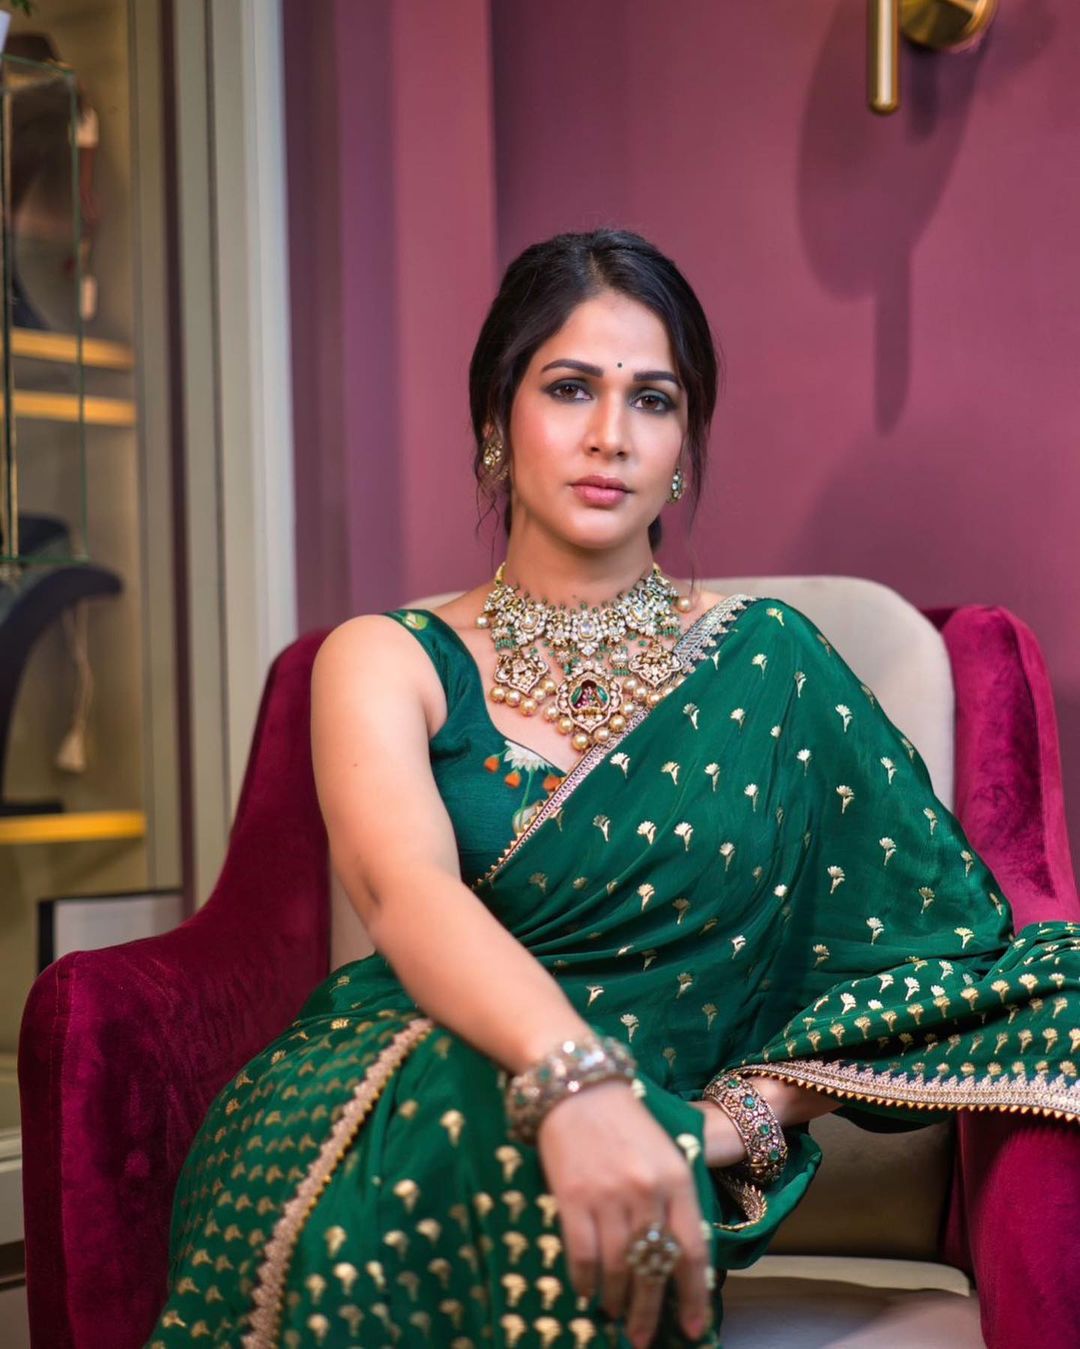 Lavanya Tripathi is sizzling in a green saree